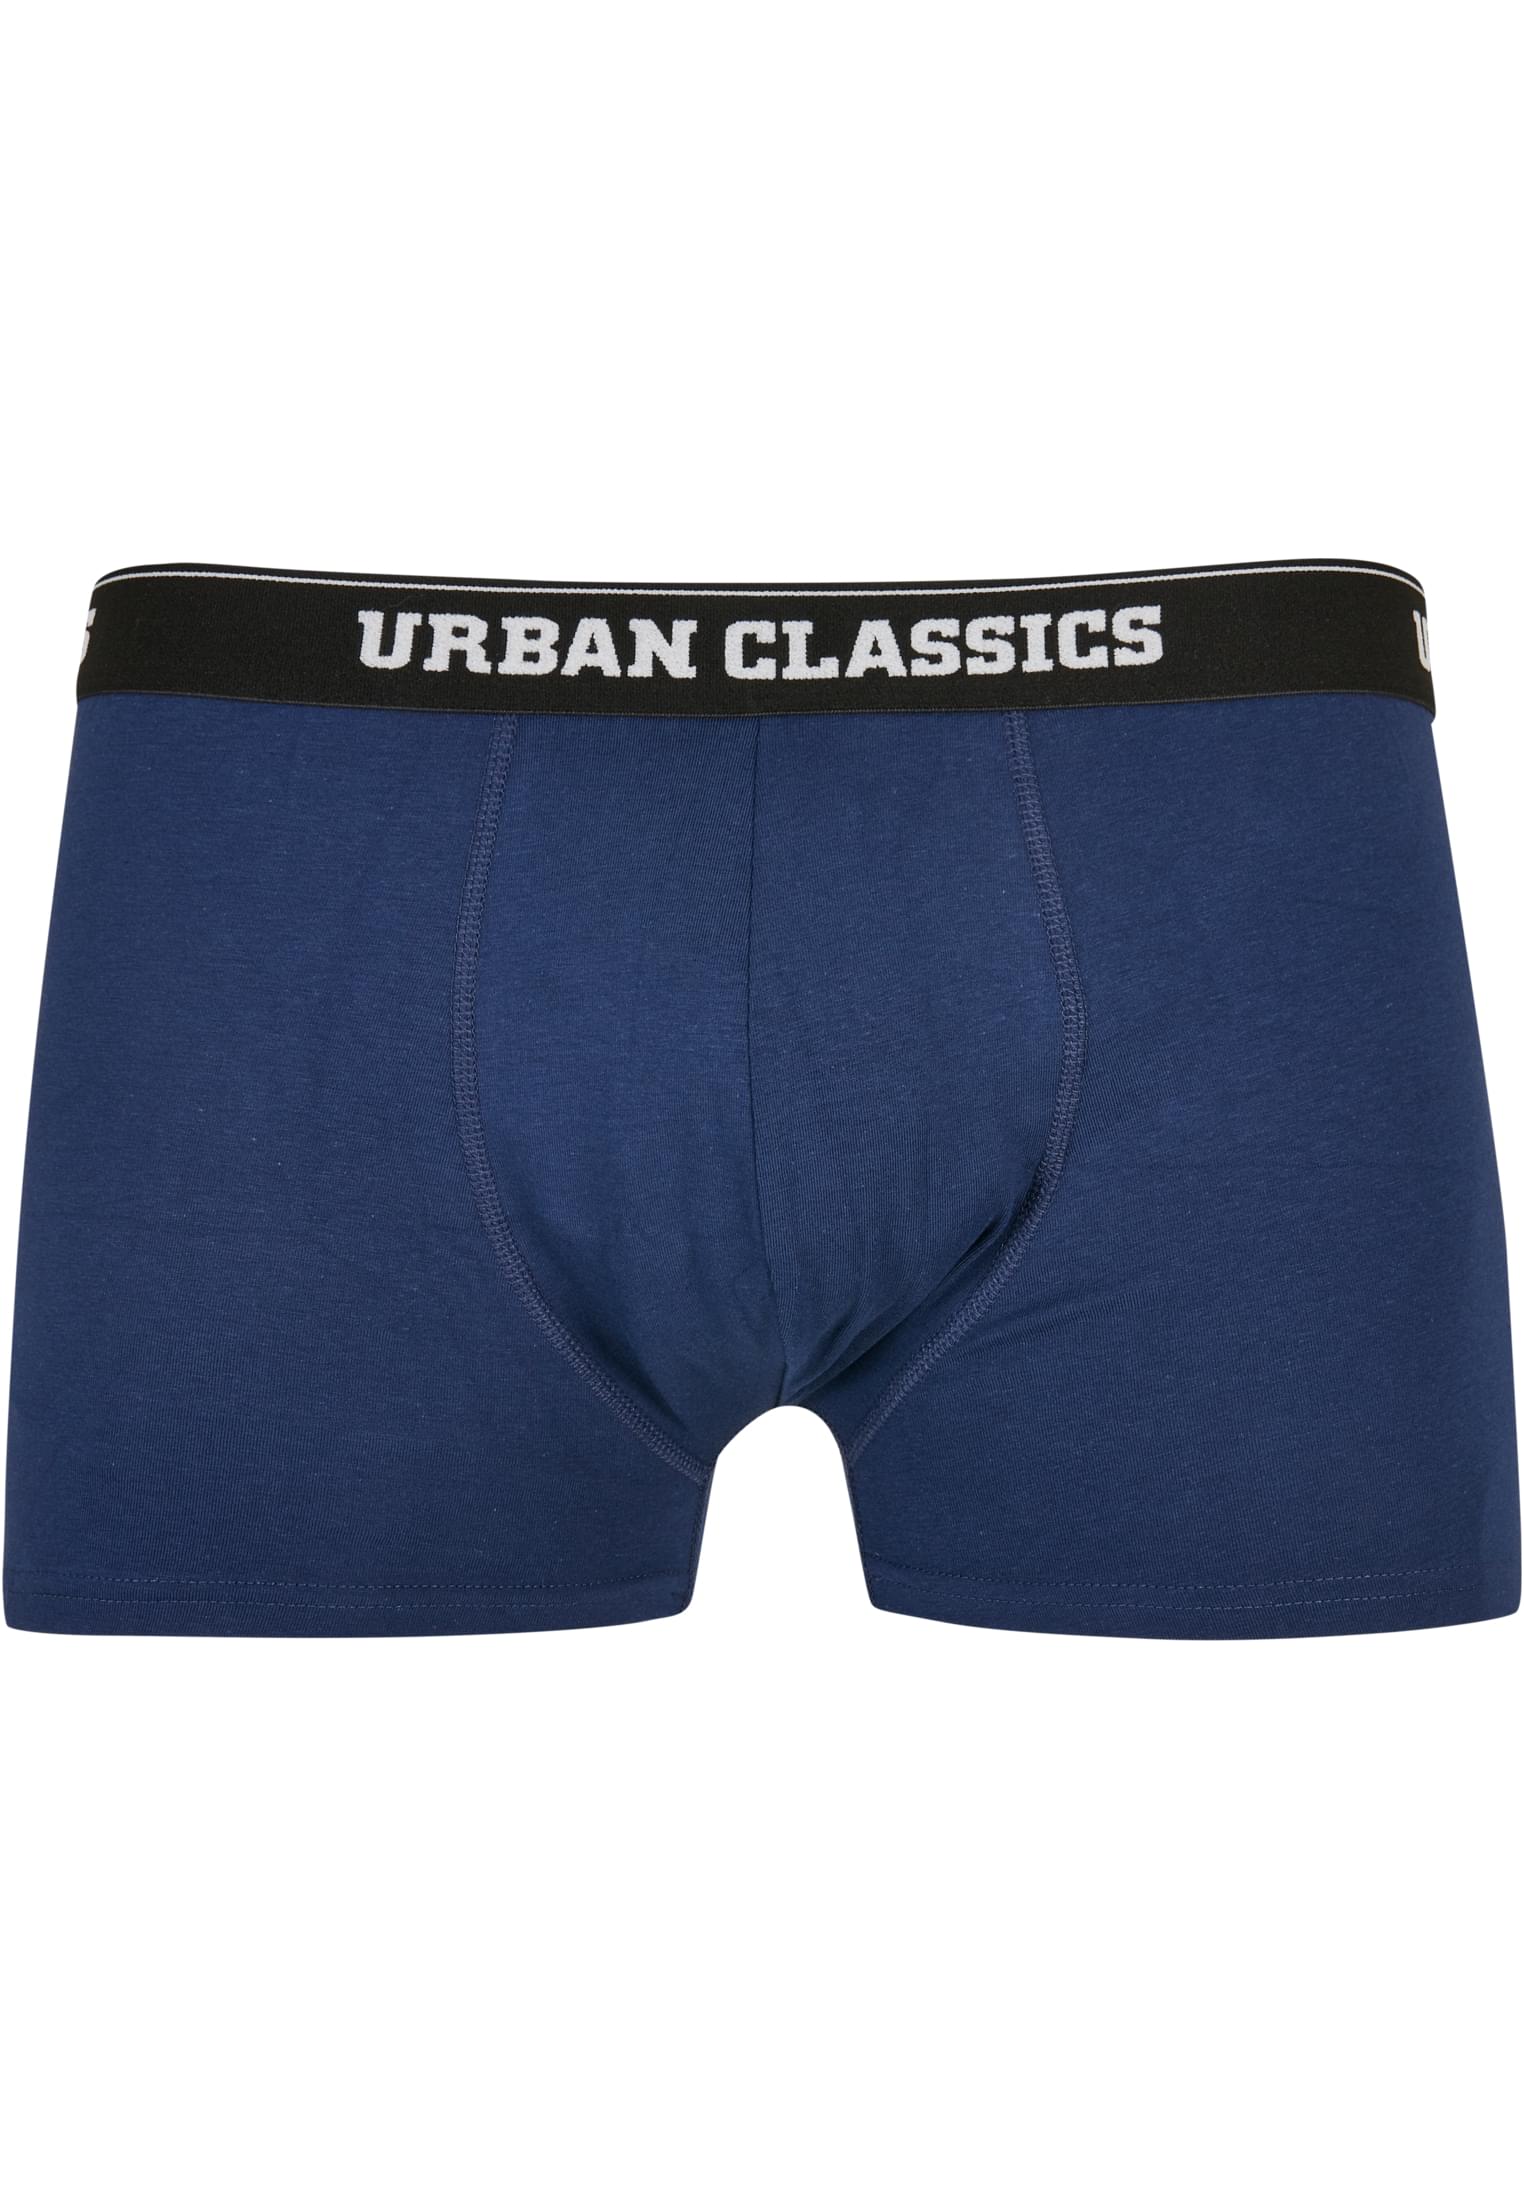 Underwear Organic Boxer Shorts 3-Pack in Farbe darkblue+navy+black